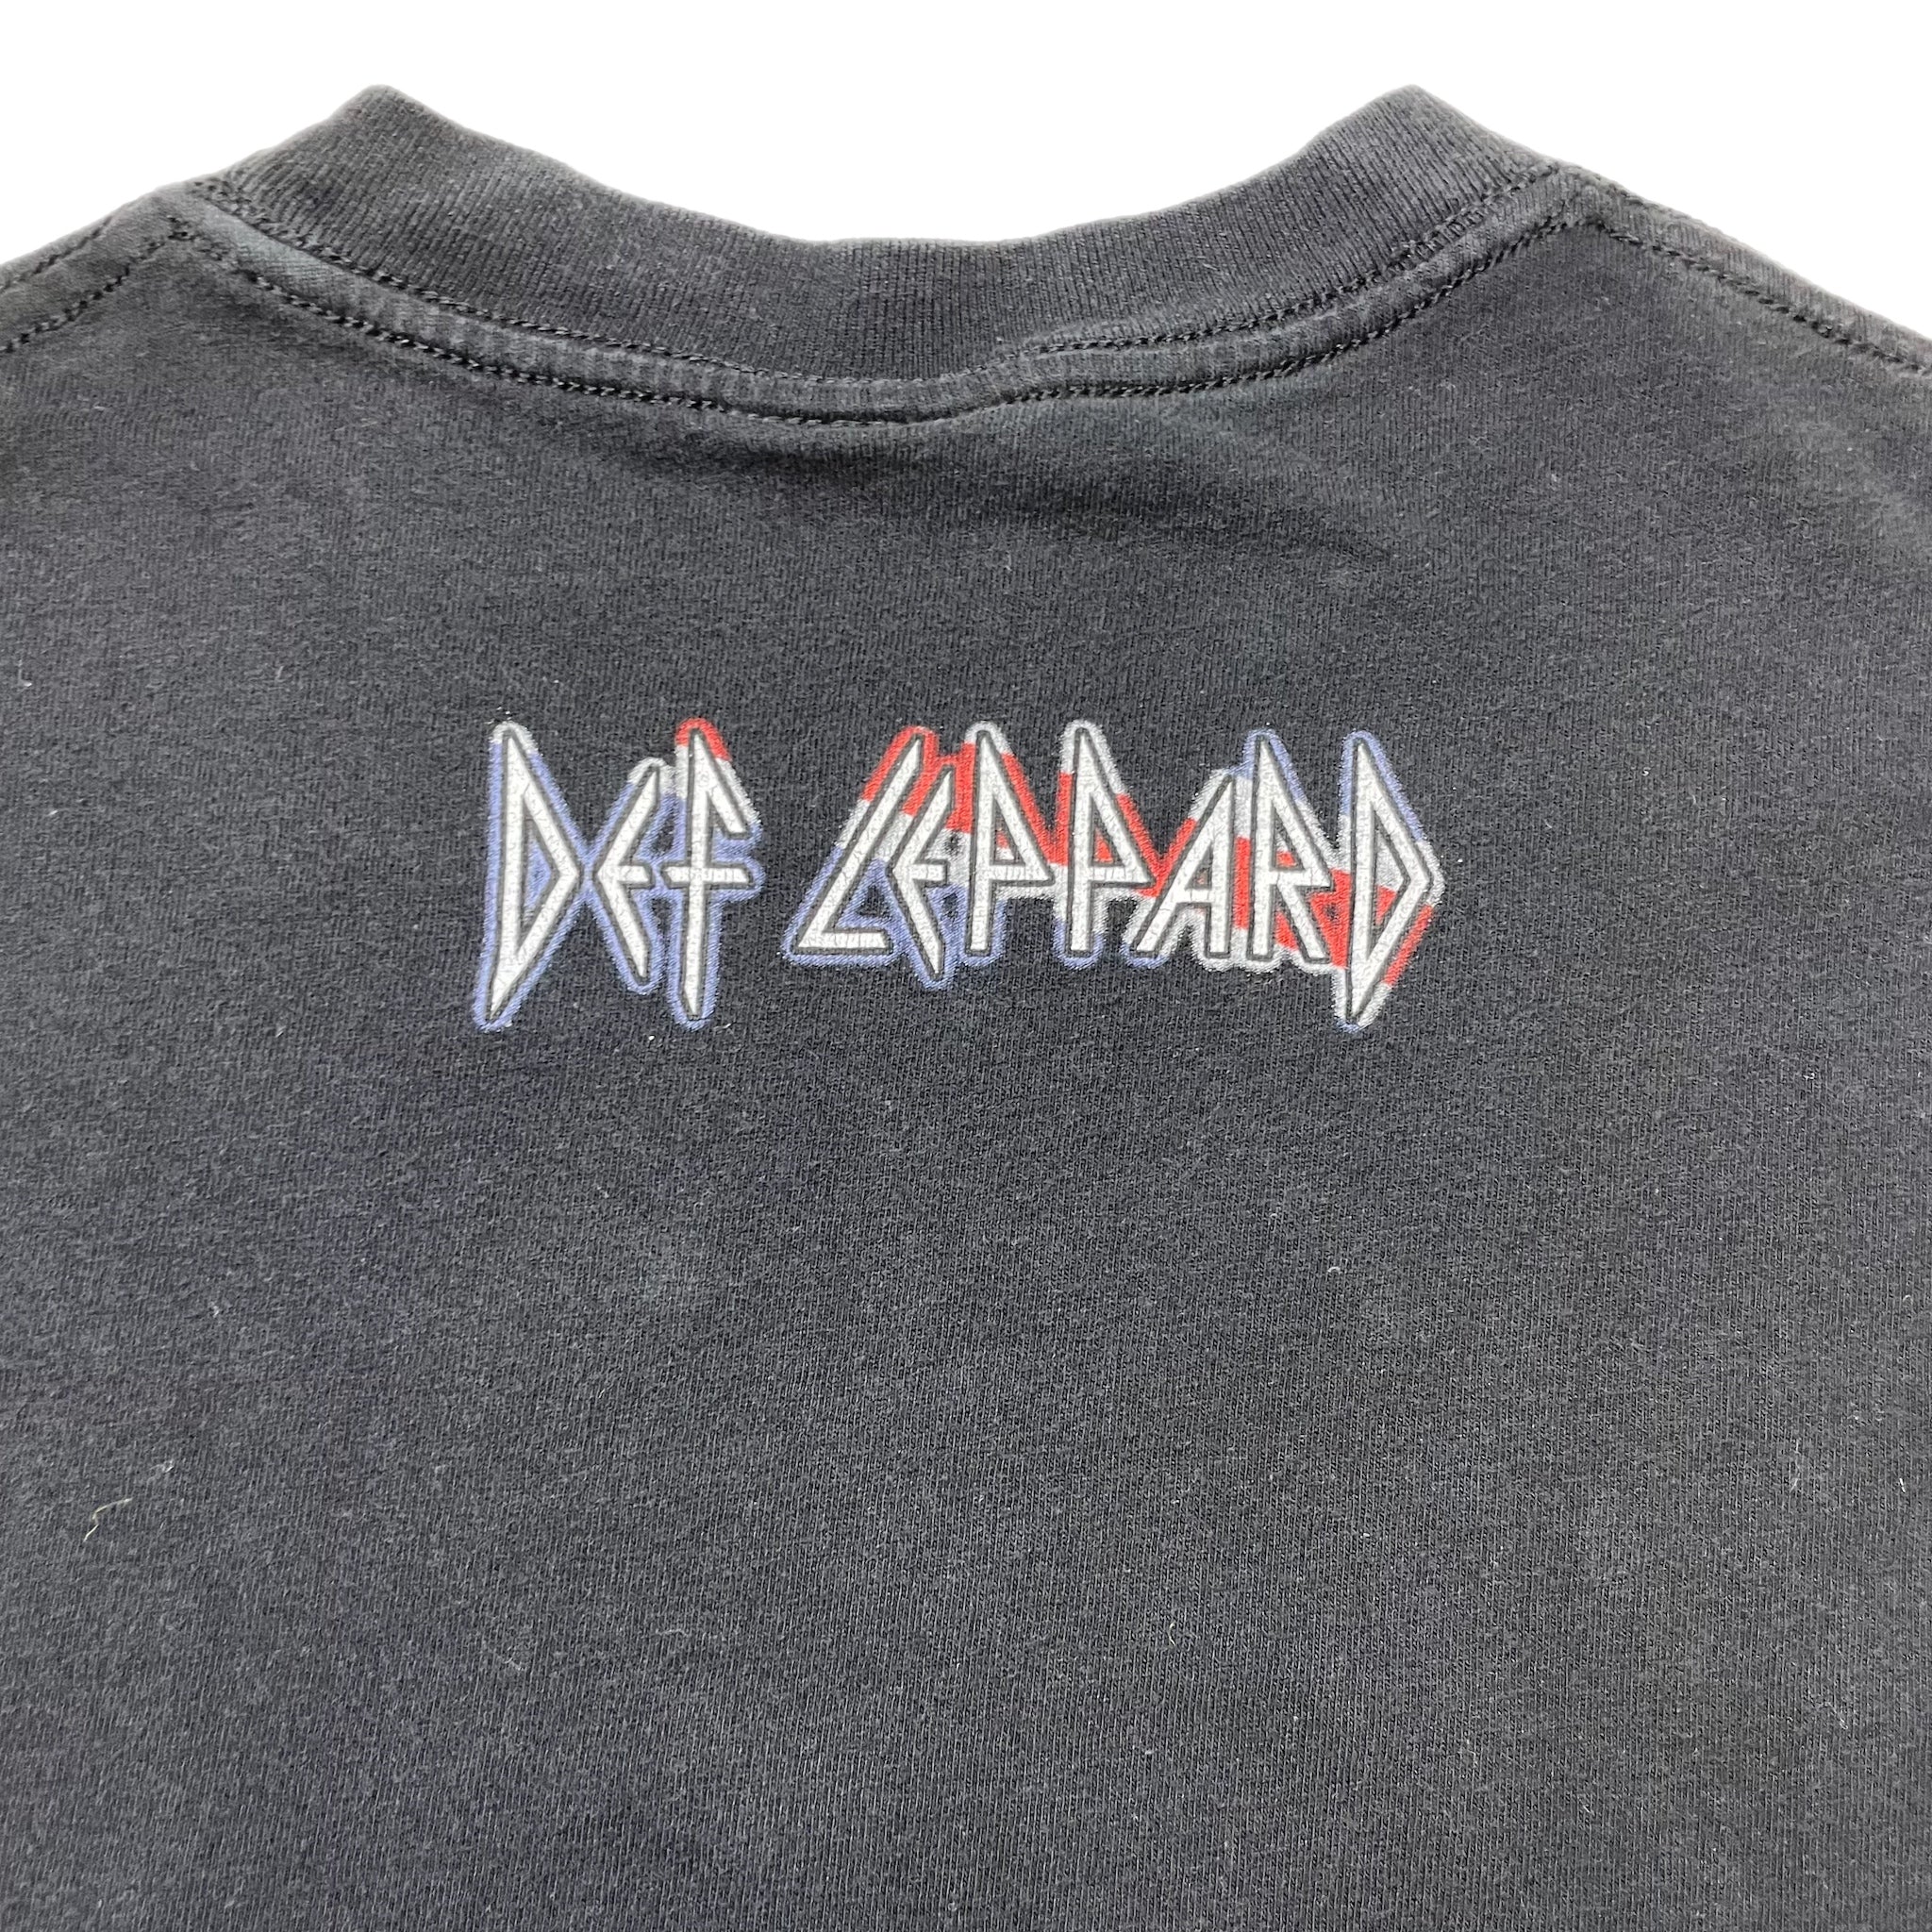 '02 Def Leppard Vintage Shirt - Black Band Shirt